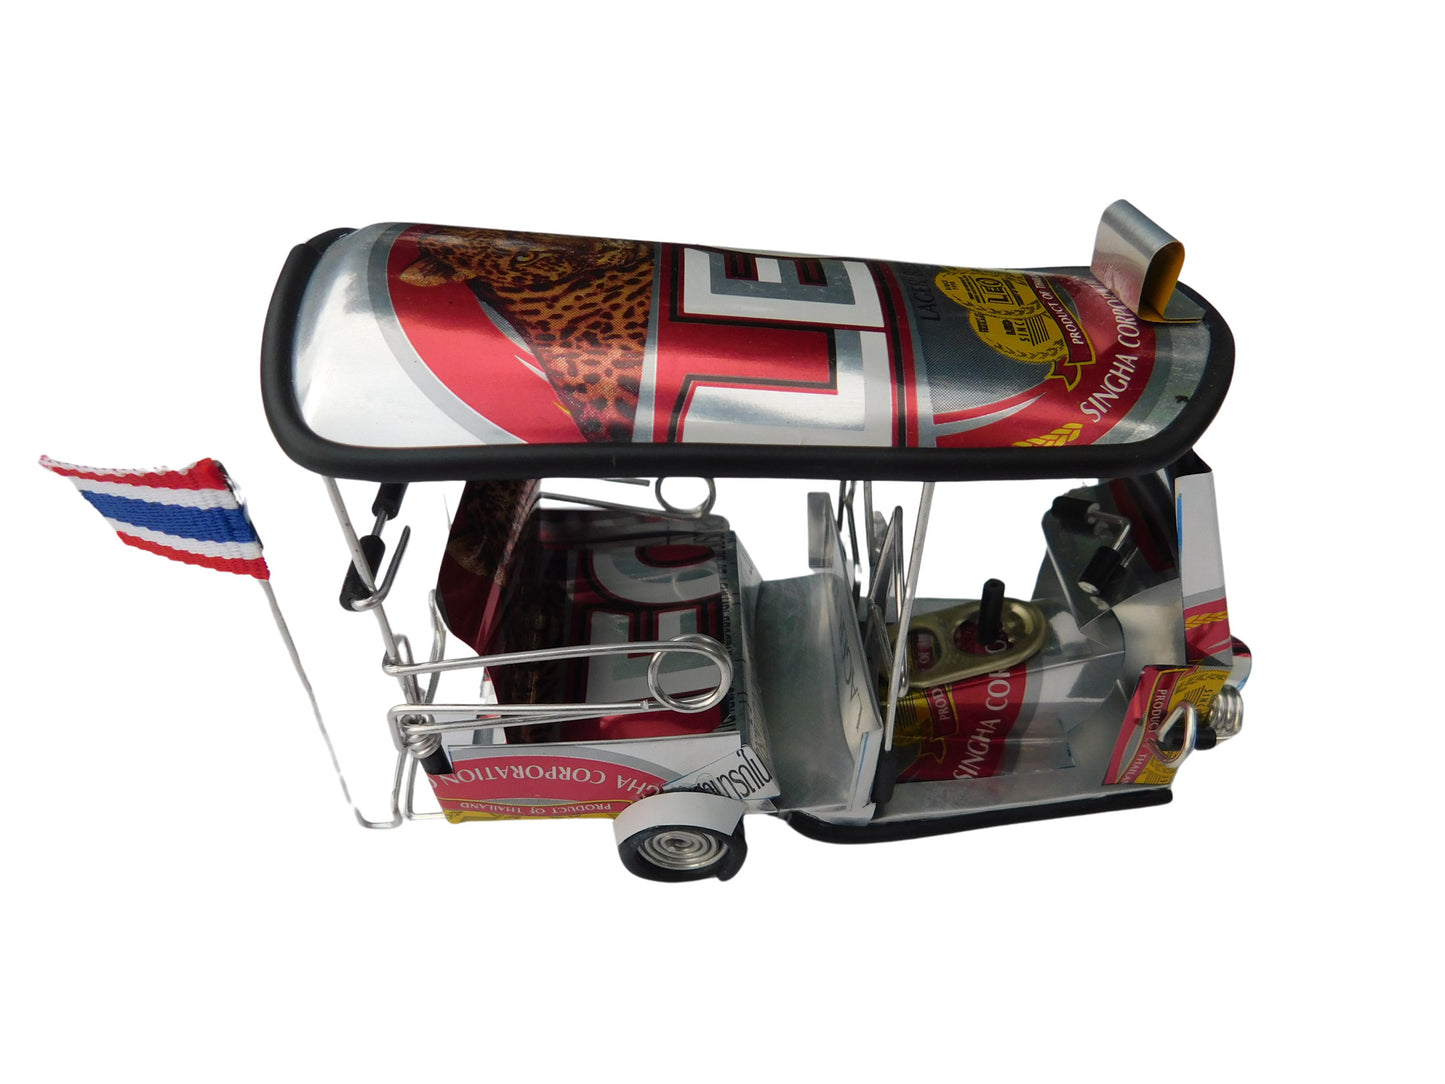 *** Leo Beer *** Detailgetreue Handgefertigte Nachbildung: TUK TUK Taxi aus Thailand - 14x7x6 cm